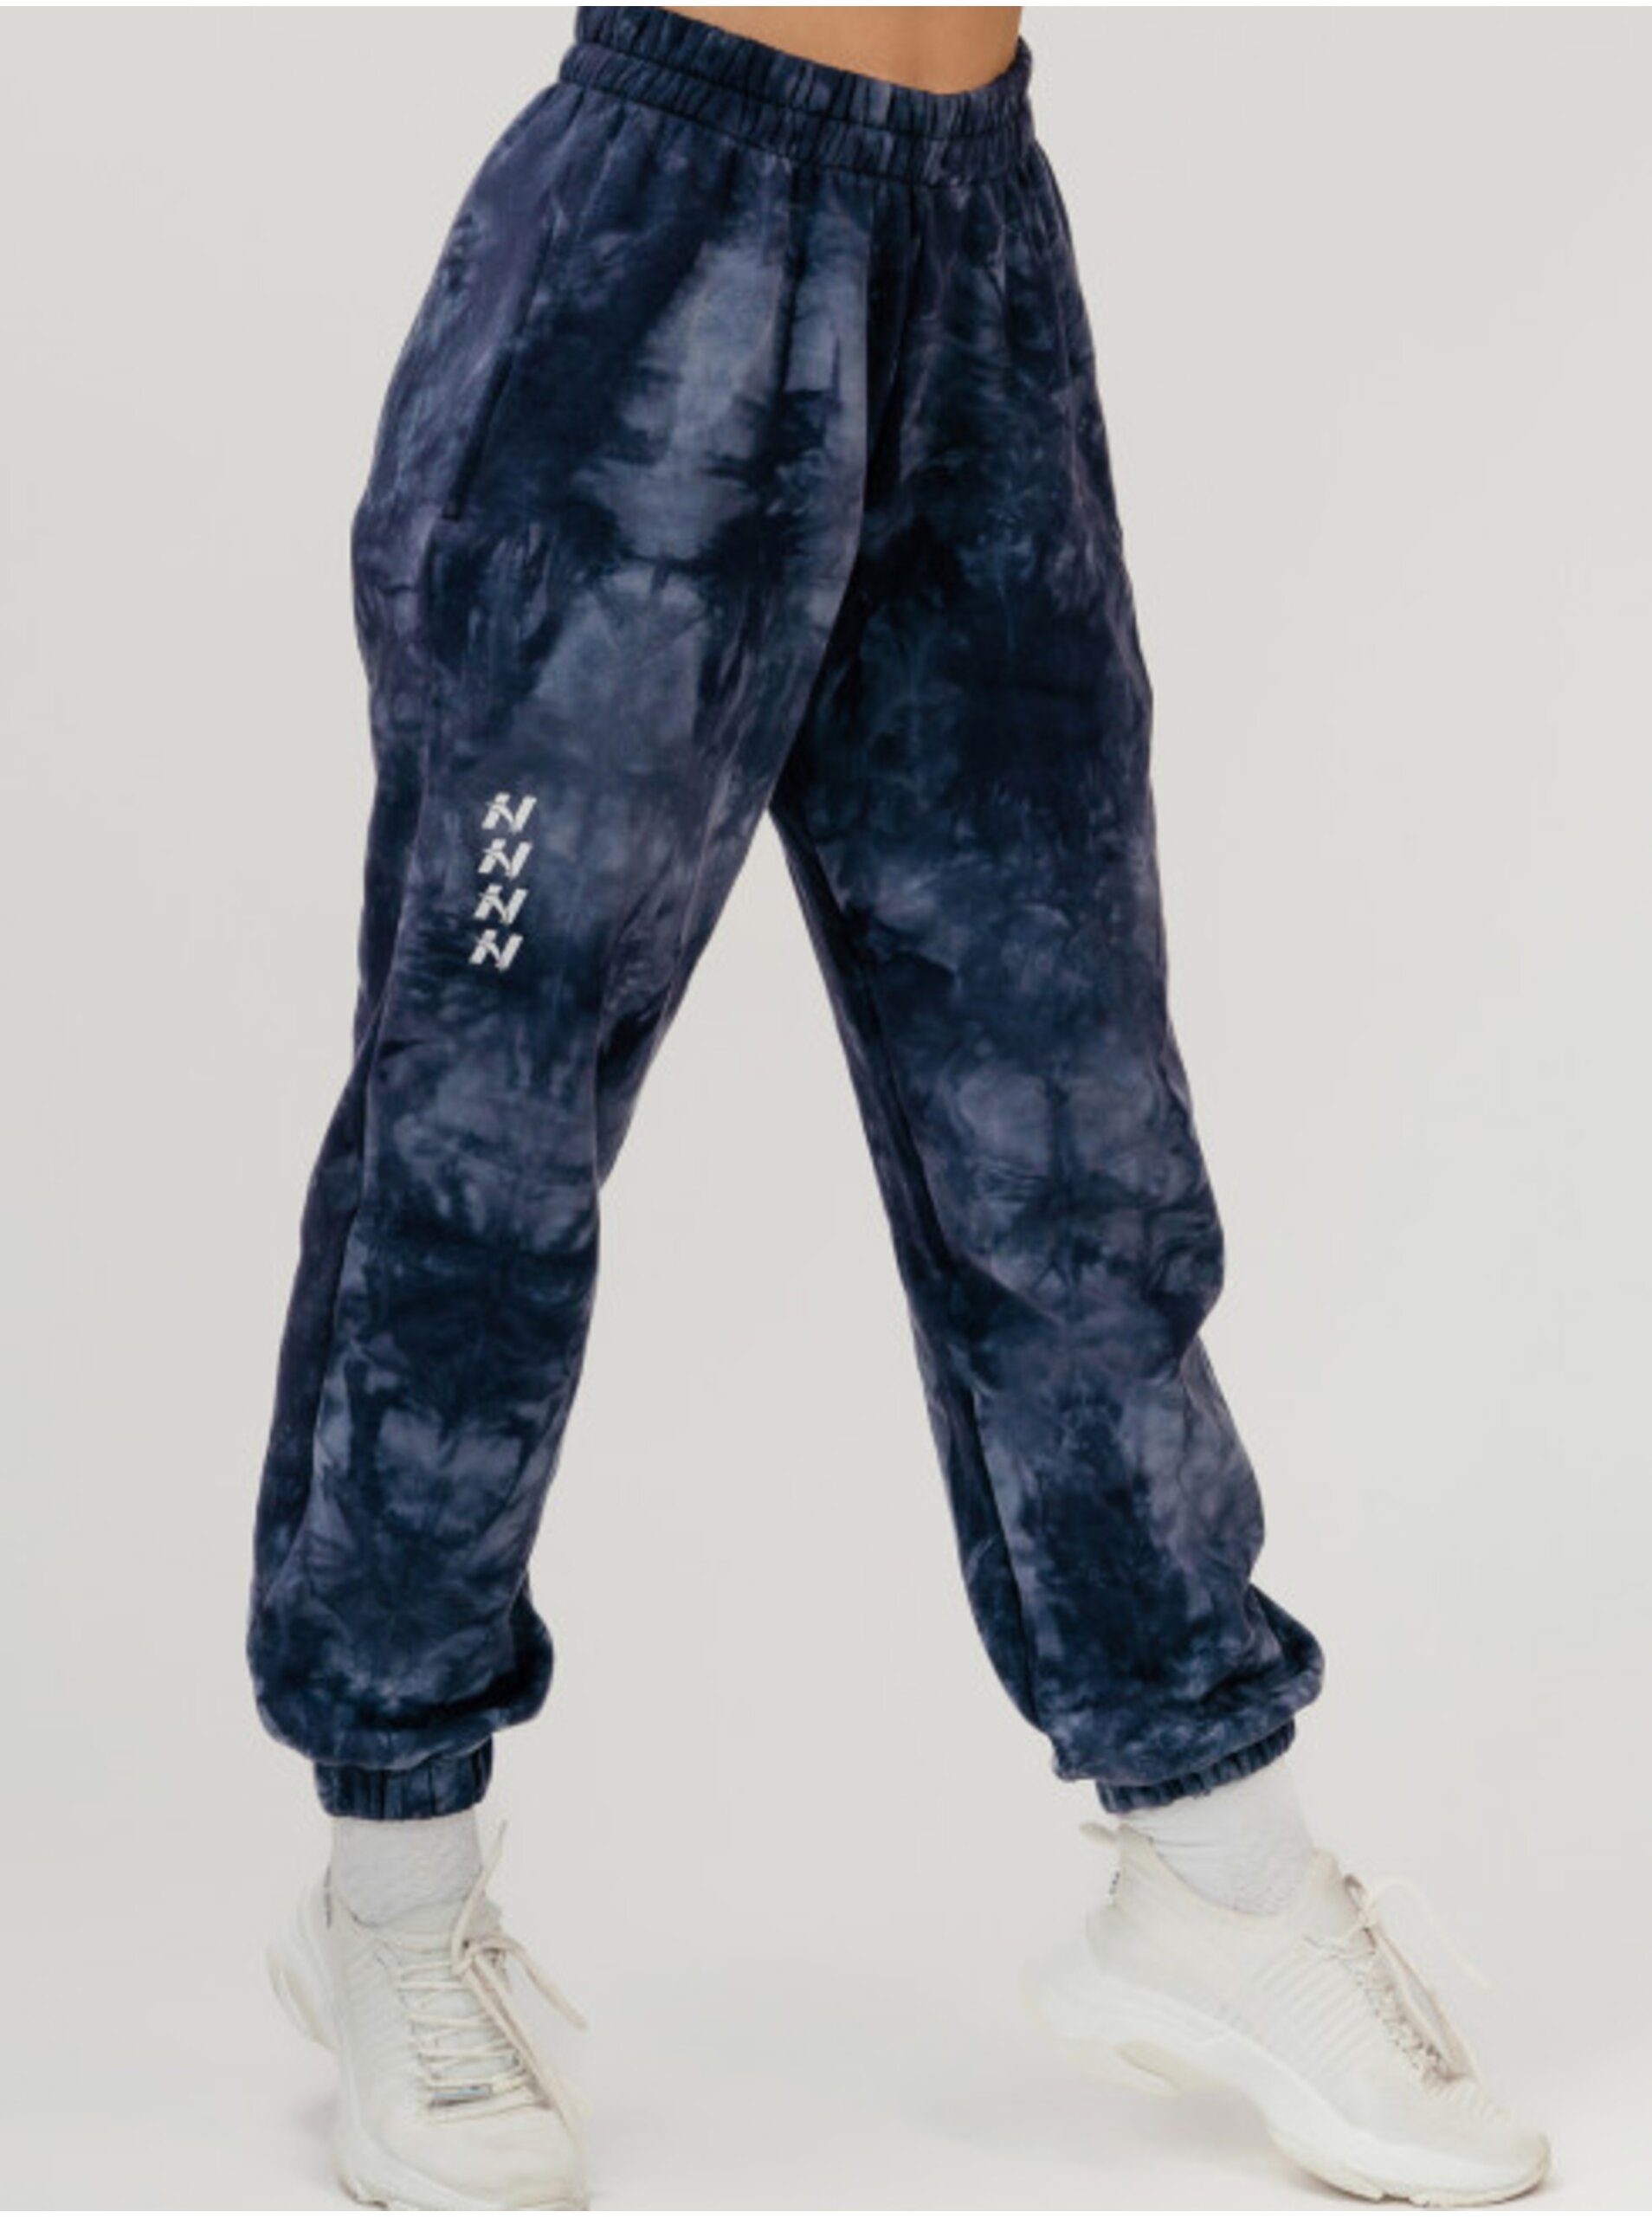 Lacno Tmavomodré dámske vzorované tepláky NEBBIA Re-fresh Women's Sweatpants